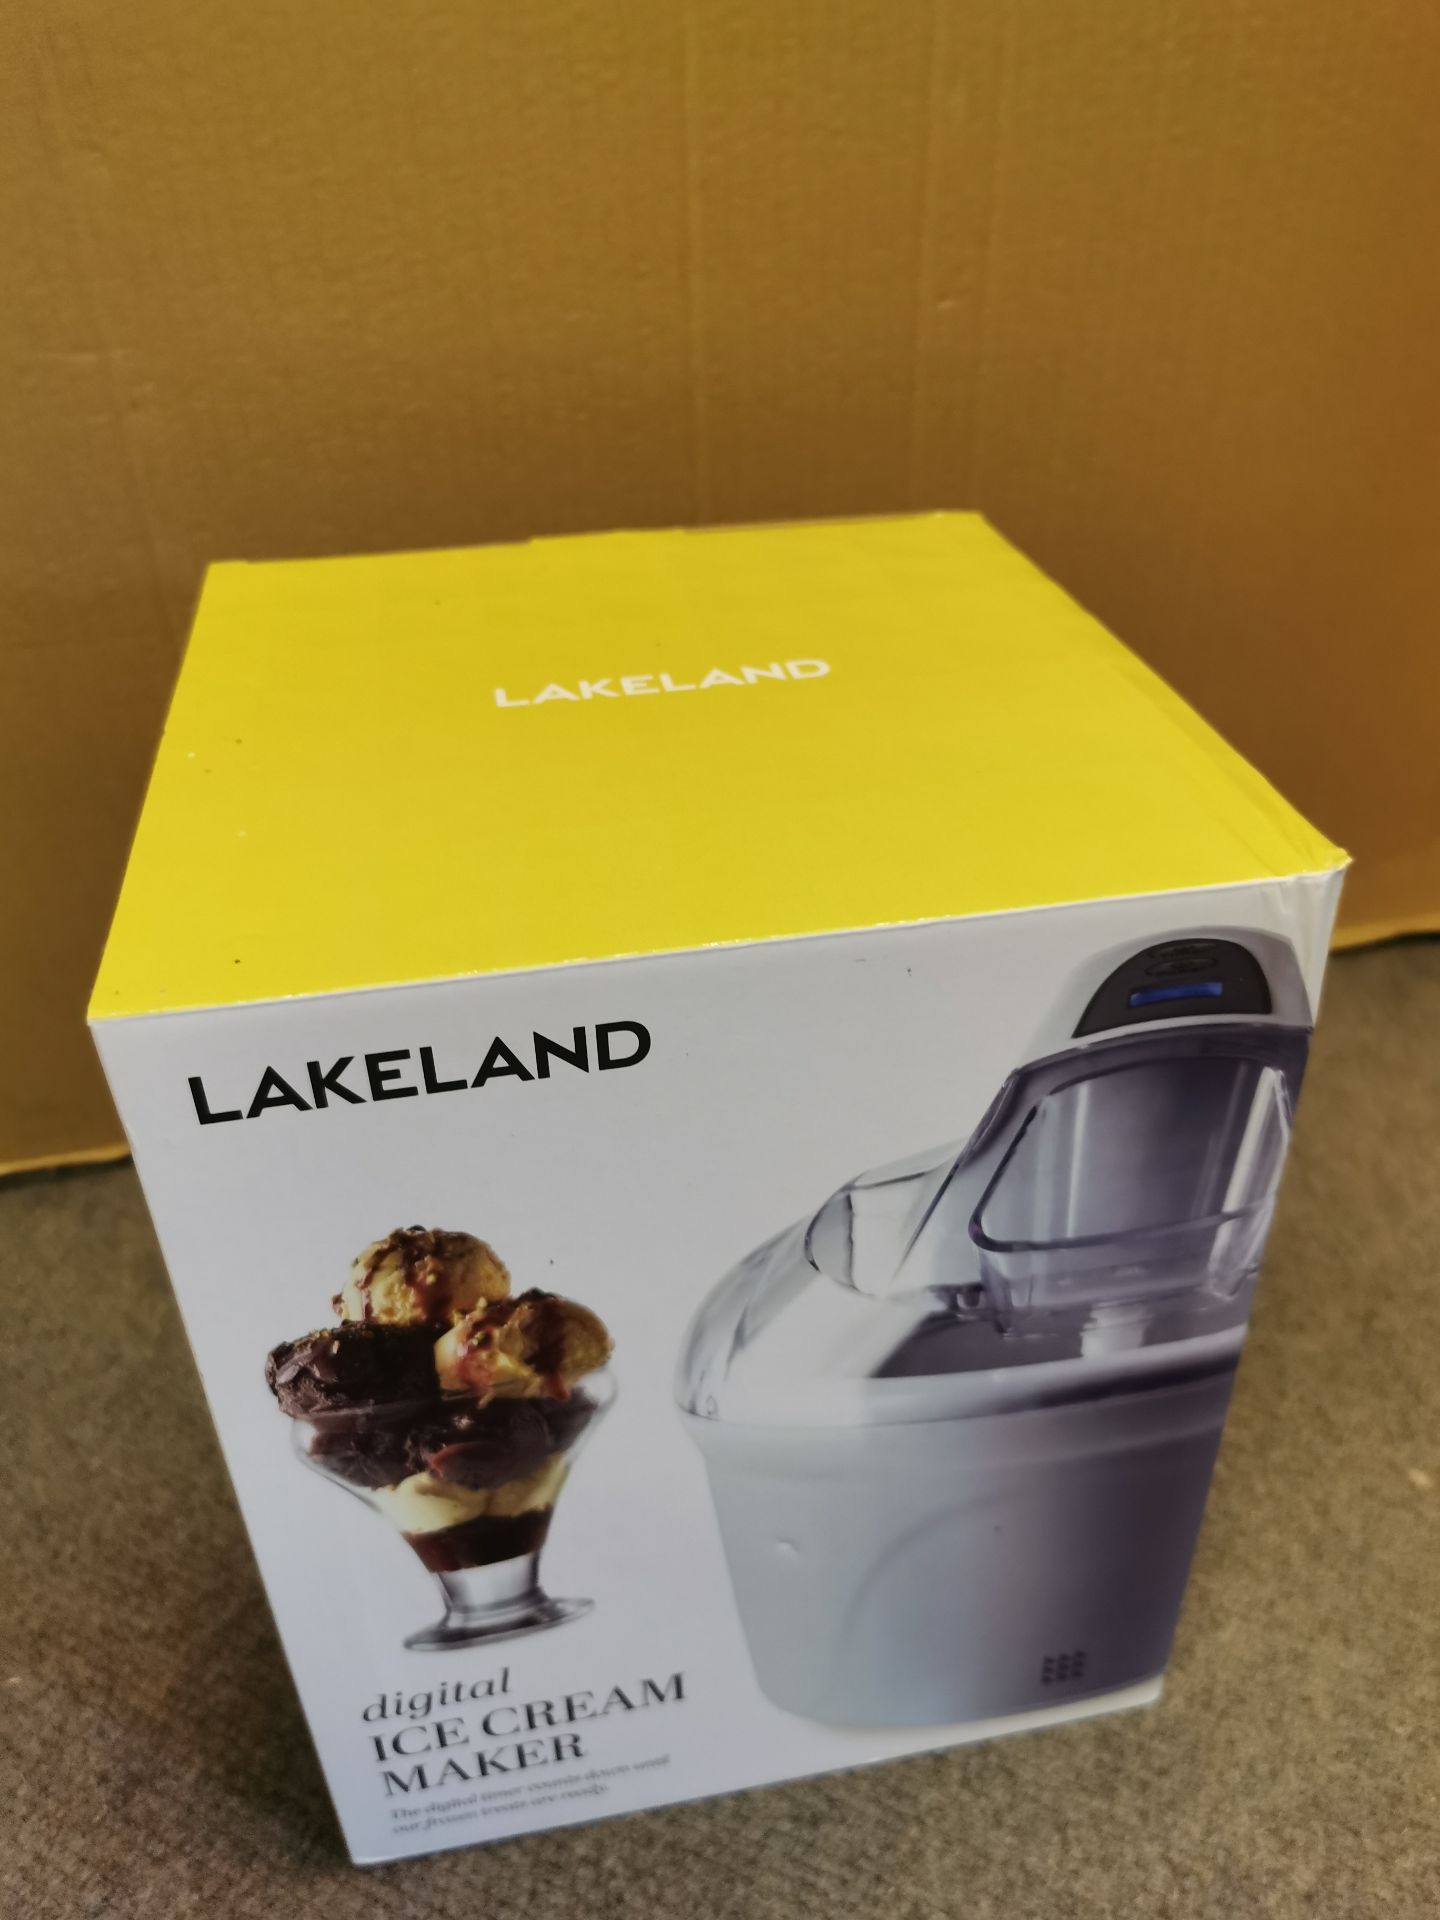 *Lakeland Digital Ice Cream maker. New - Image 3 of 3